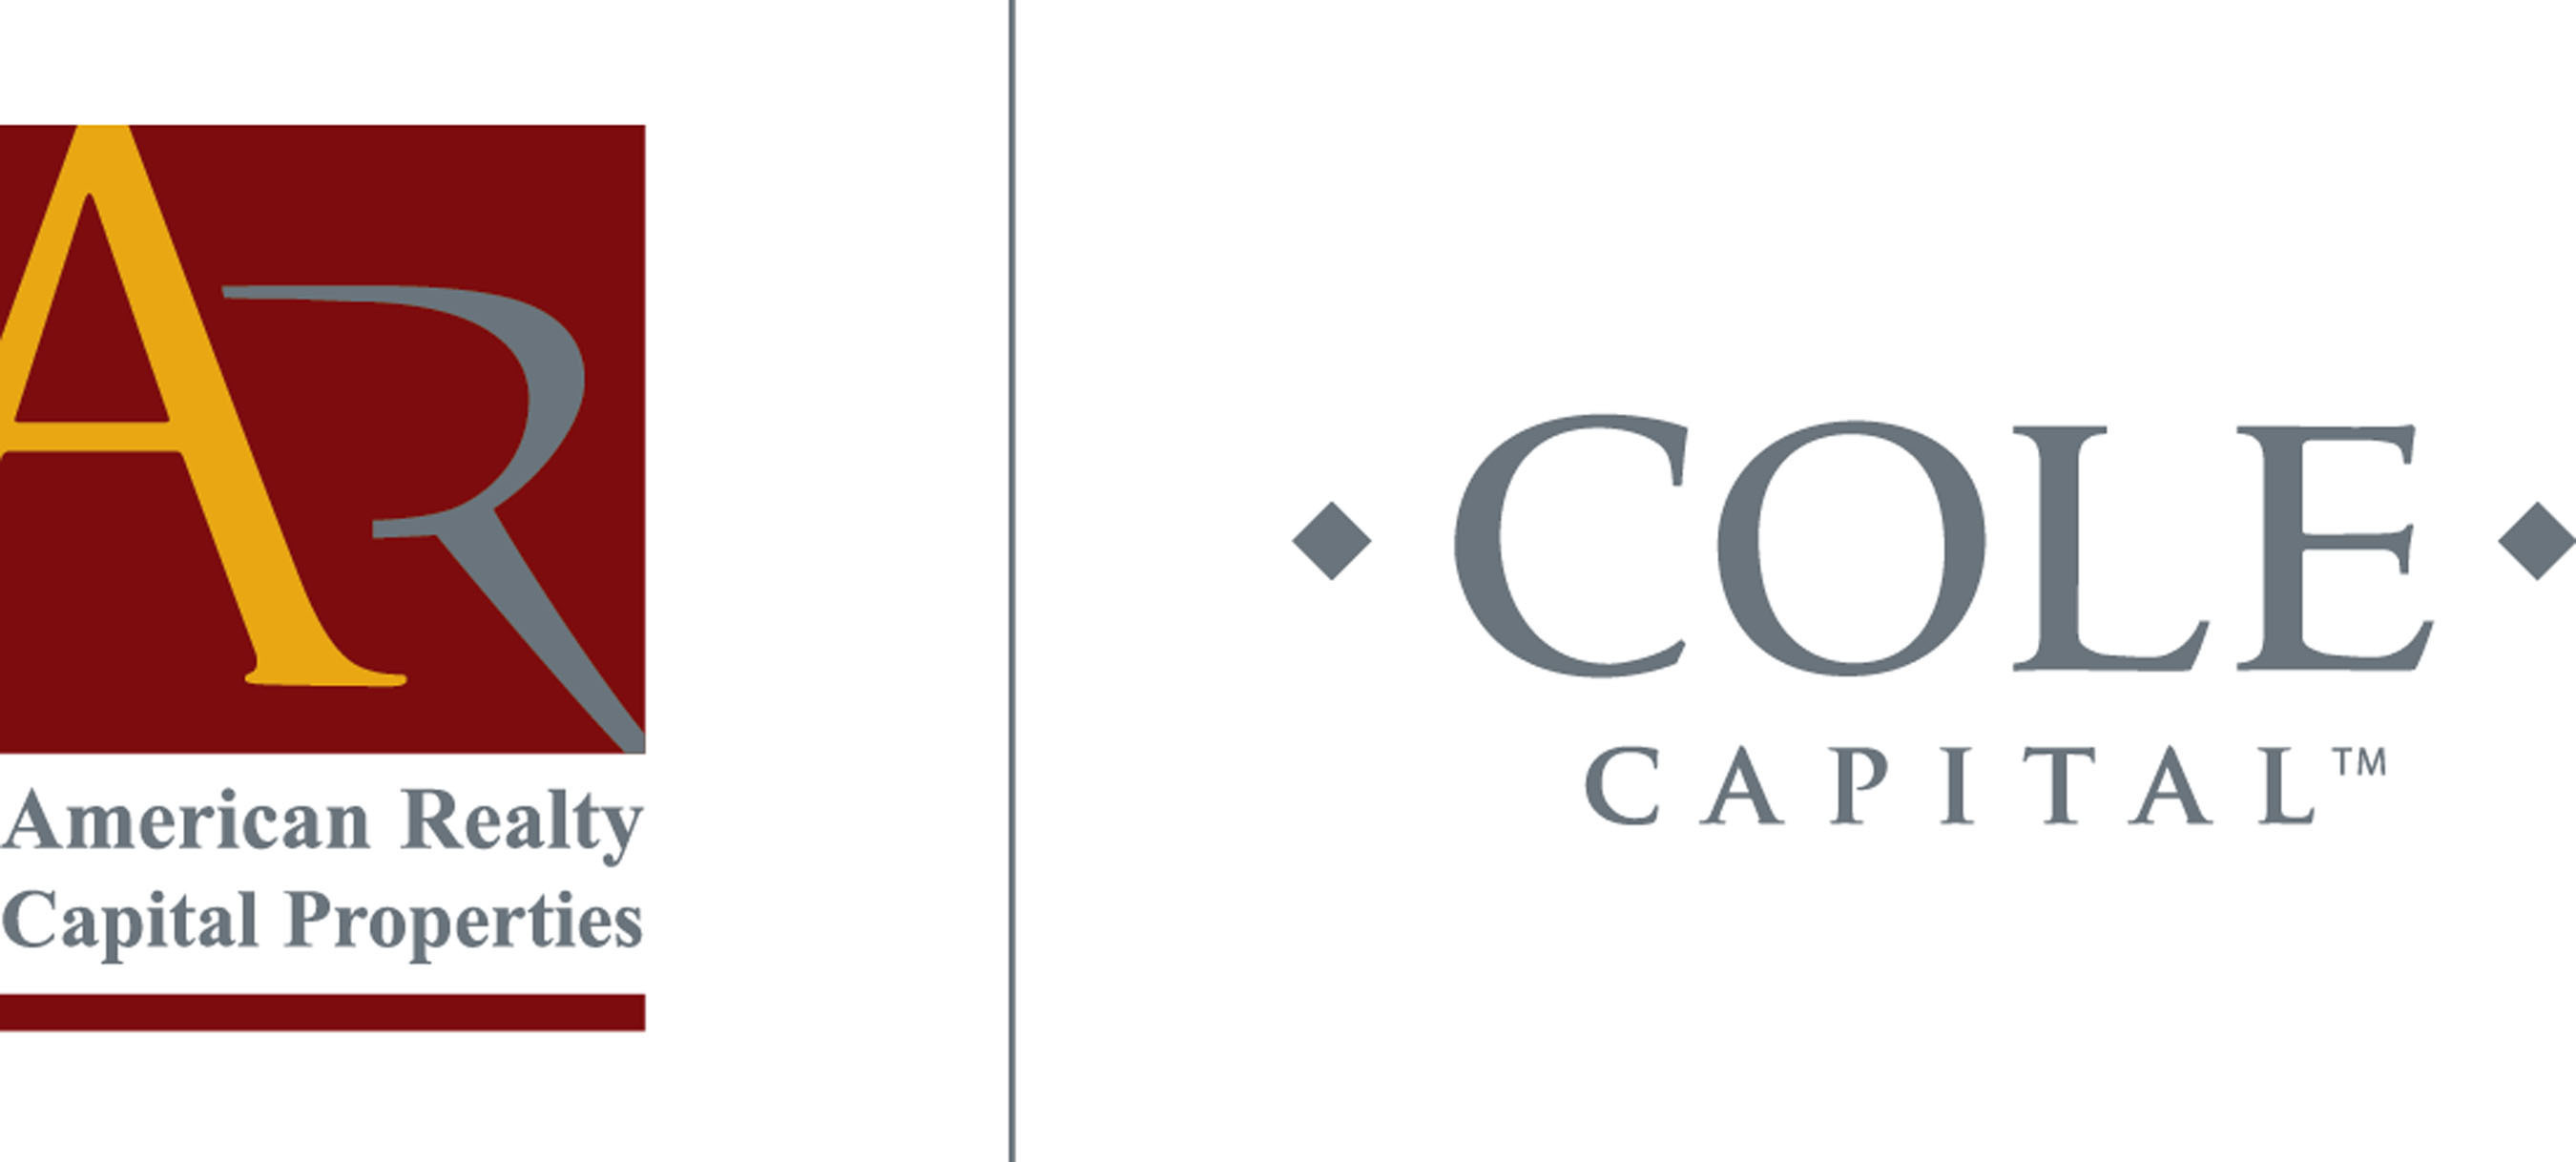 ARCP/Cole Capital Combined Logo. (PRNewsFoto/American Realty Capital Properties, Inc.) (PRNewsFoto/AMER REALTY CAPITAL PROPERTIES)